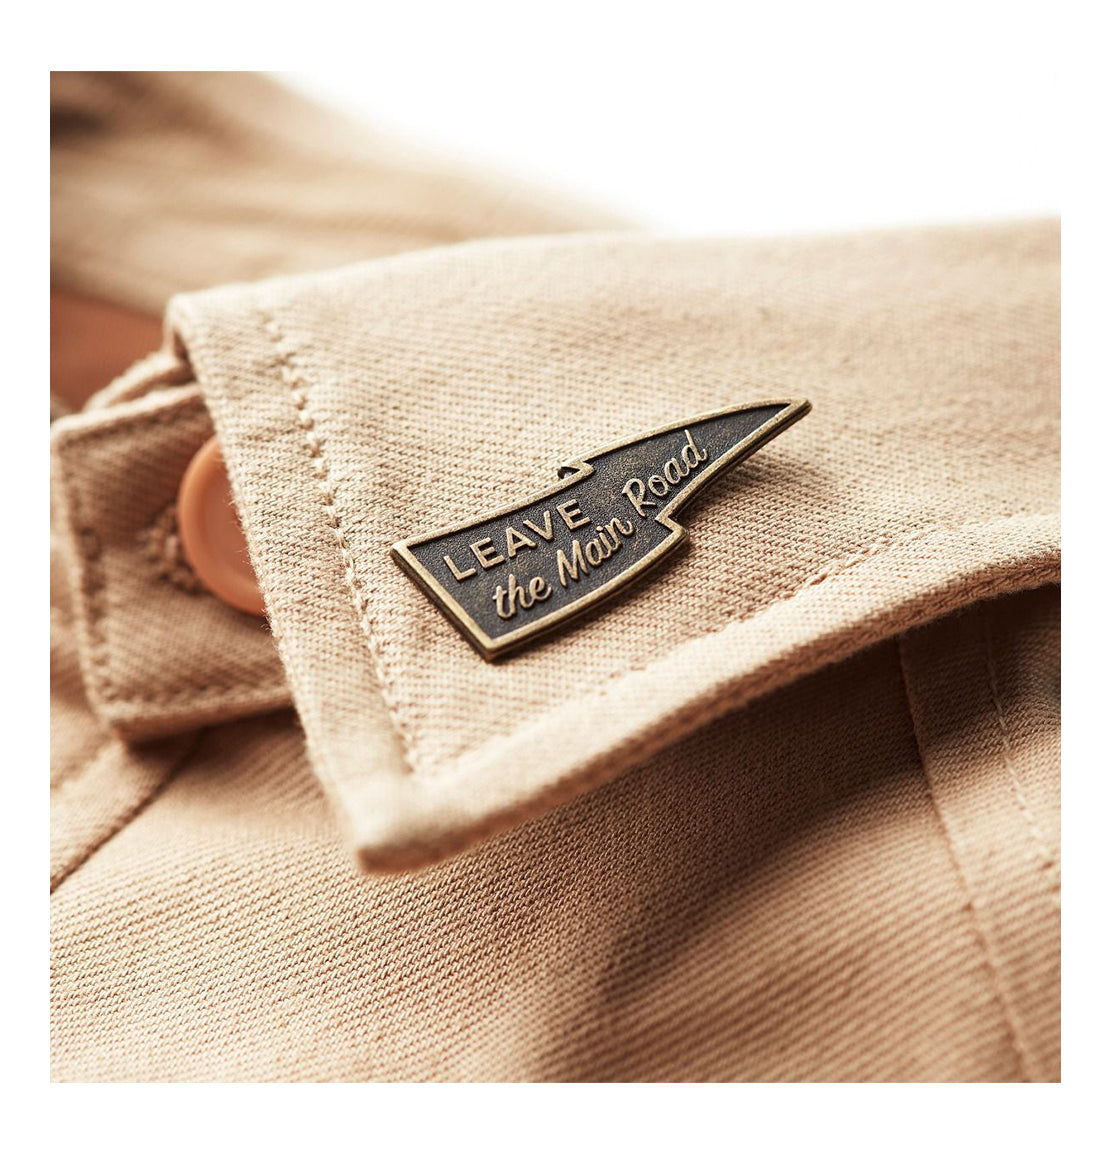 Fuel safari jacket pin